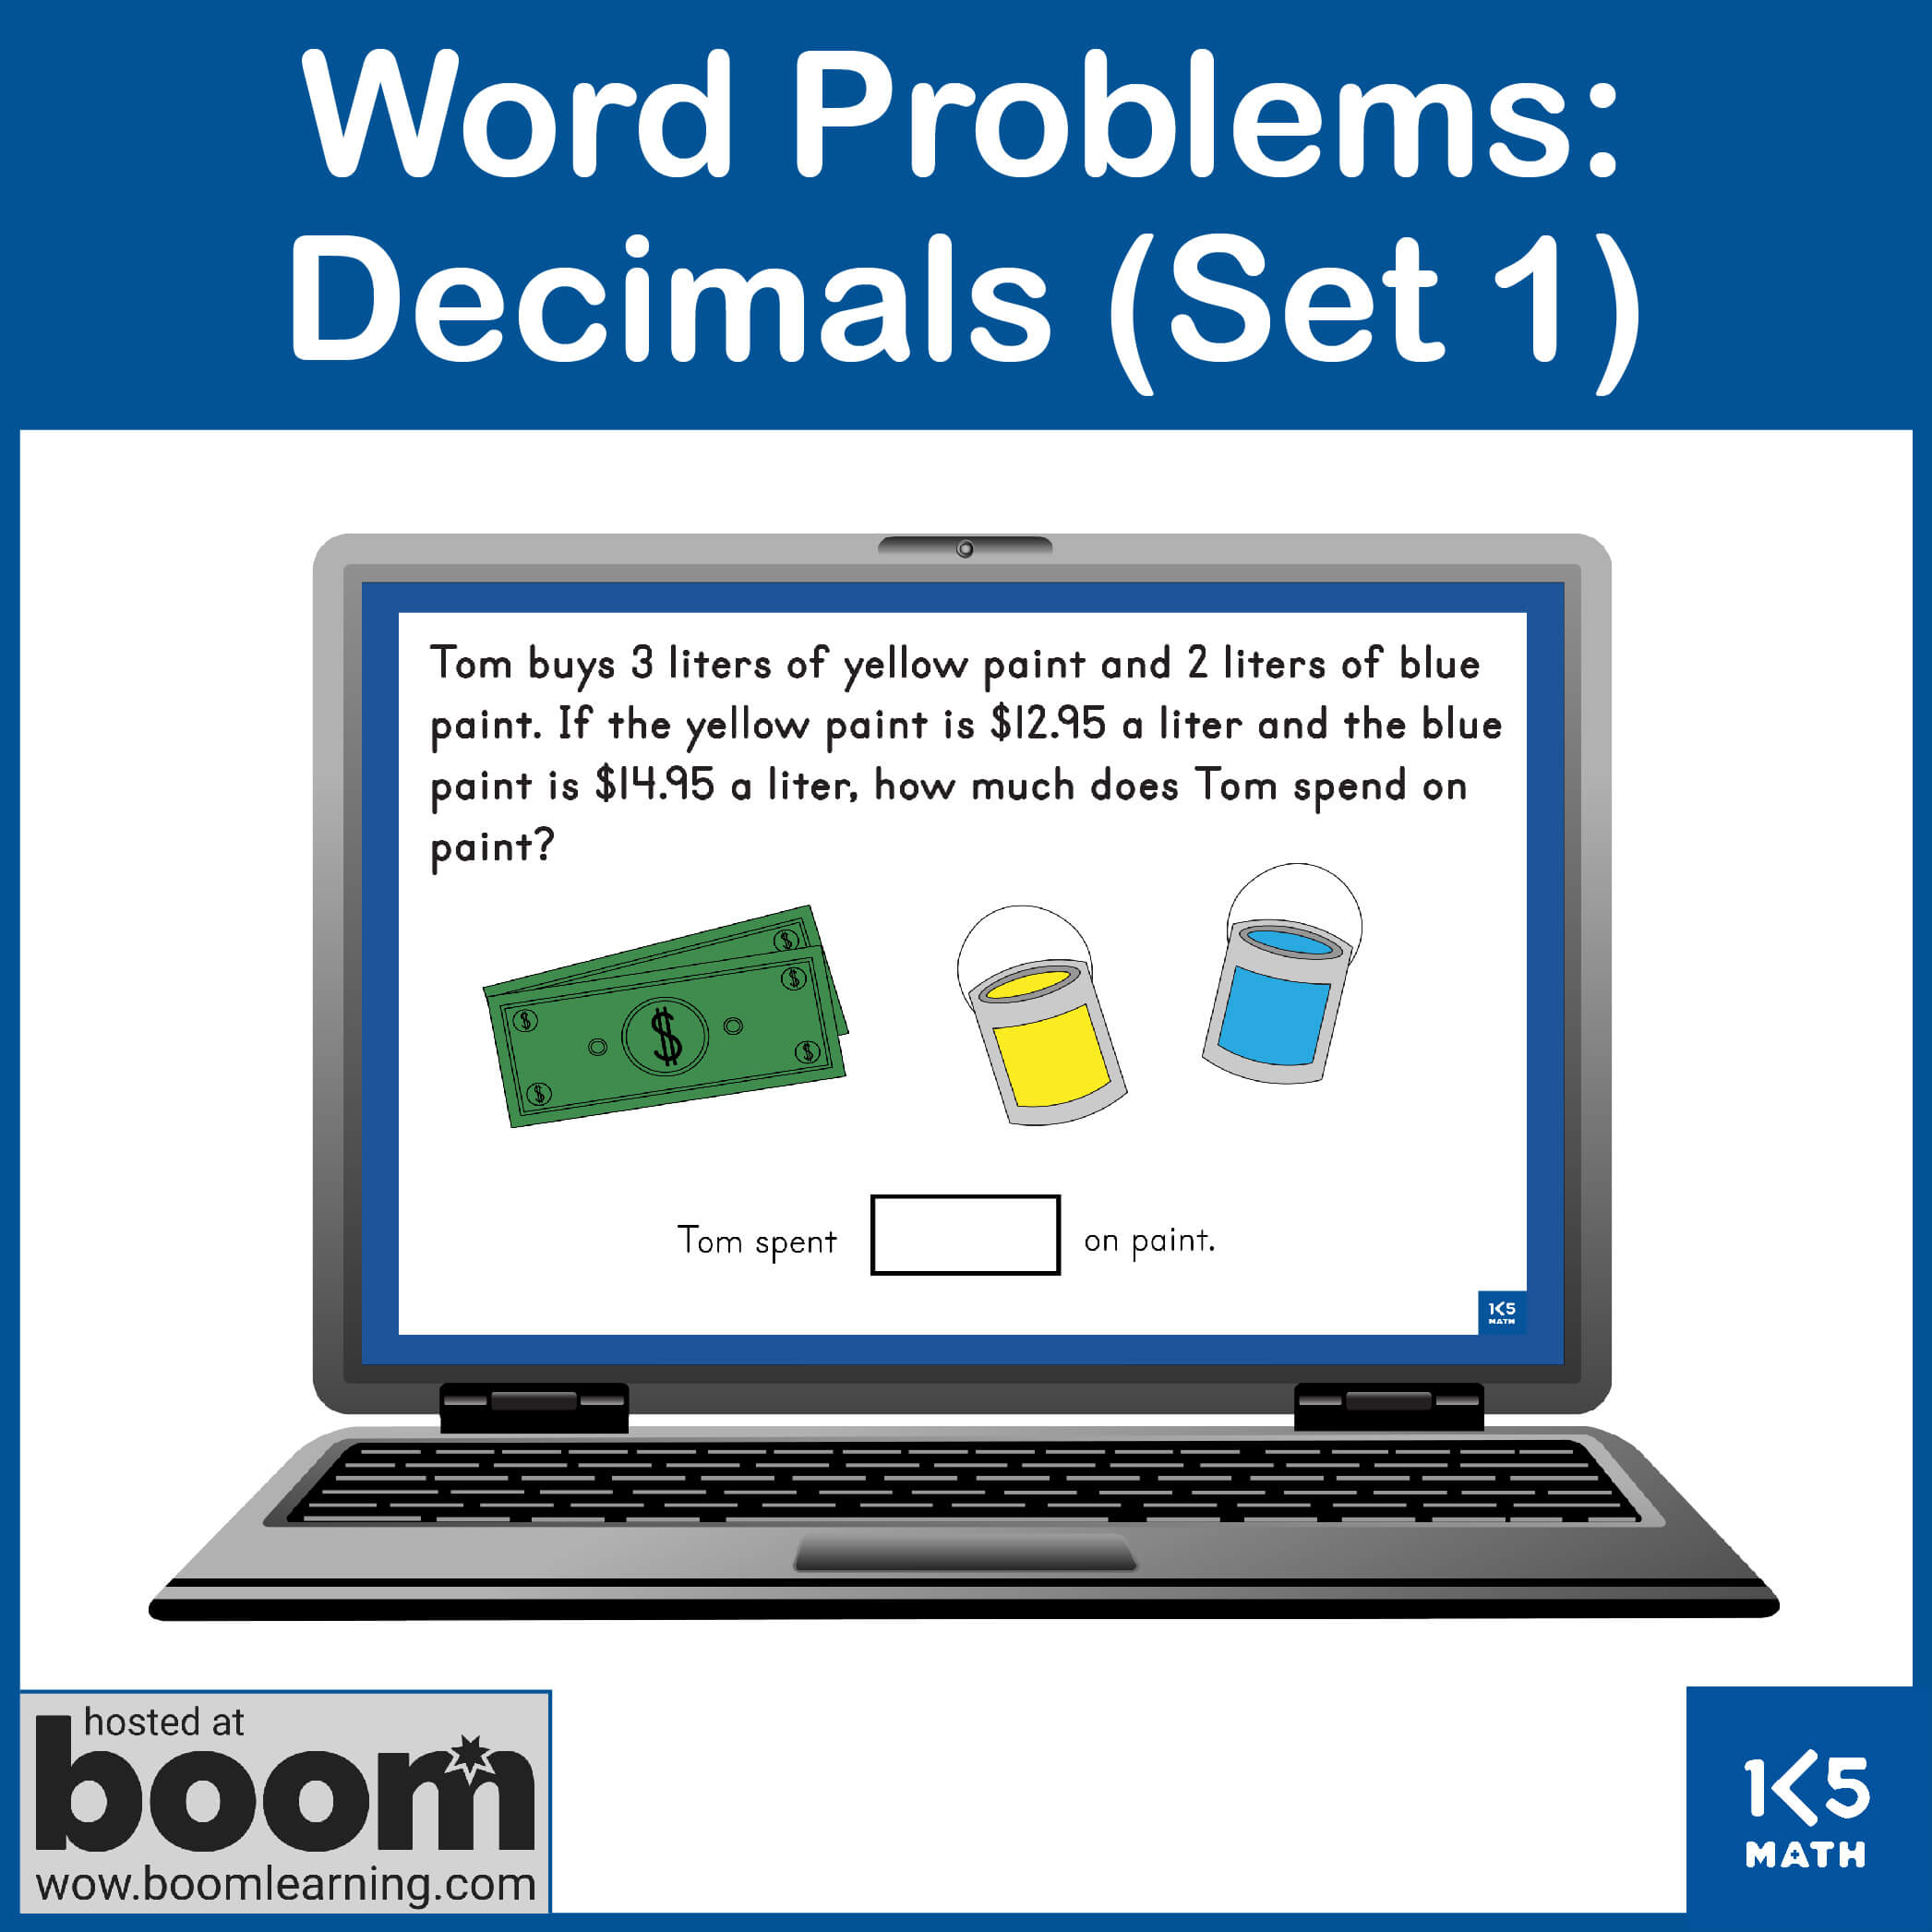 Boom Cards: Decimal Word Problems (Set 1)